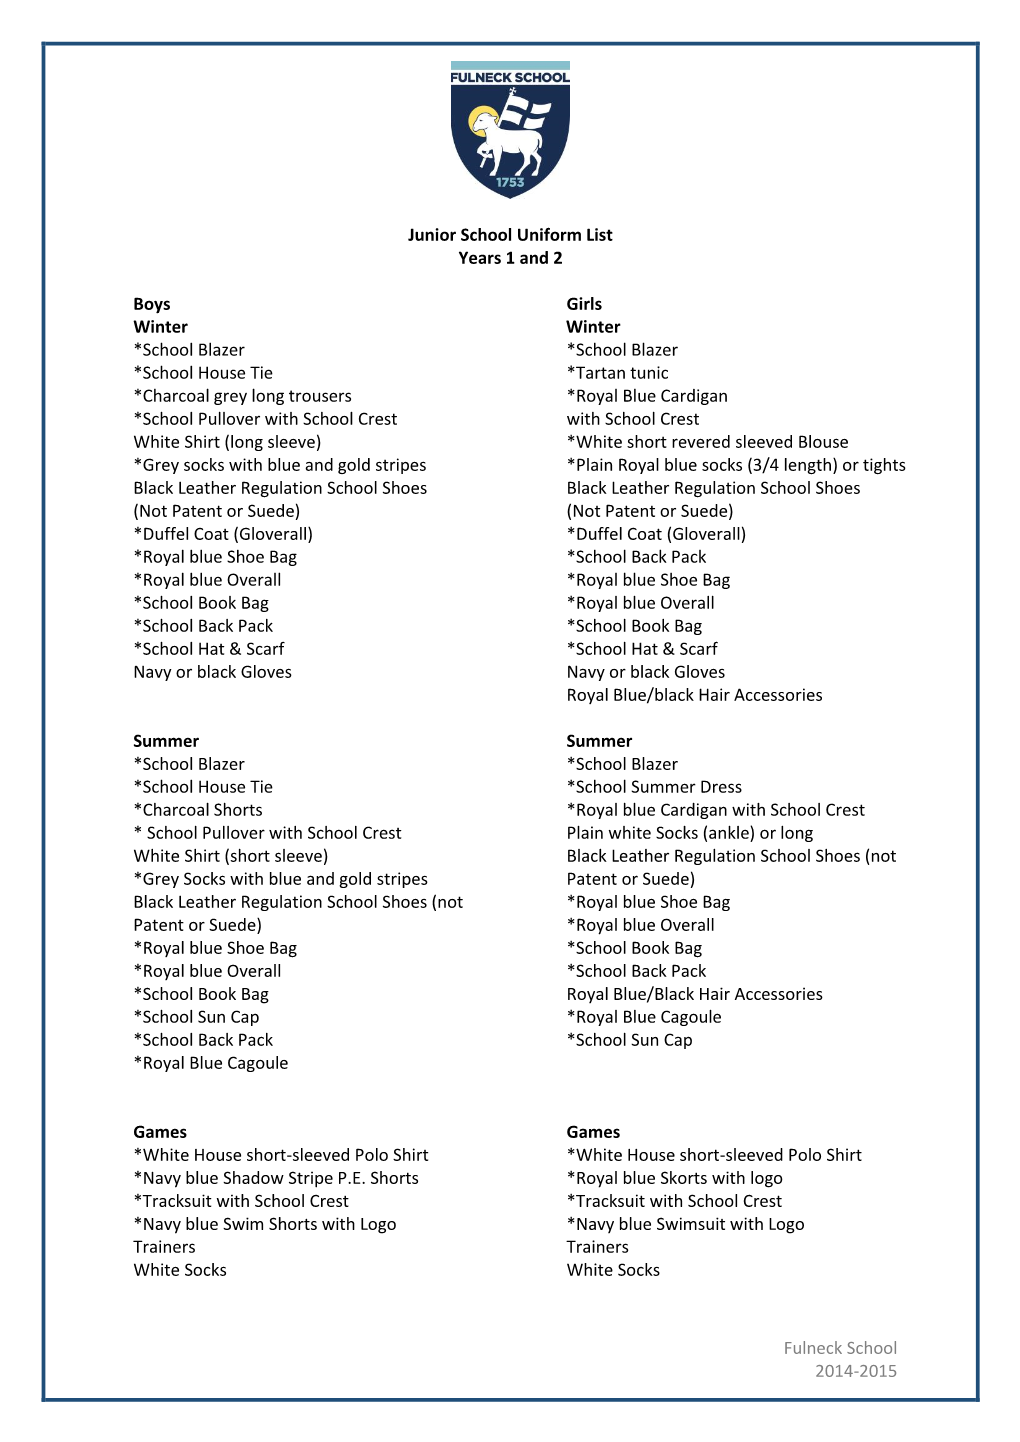 Fulneck School 2014-2015 Junior School Uniform List Years 1 and 2